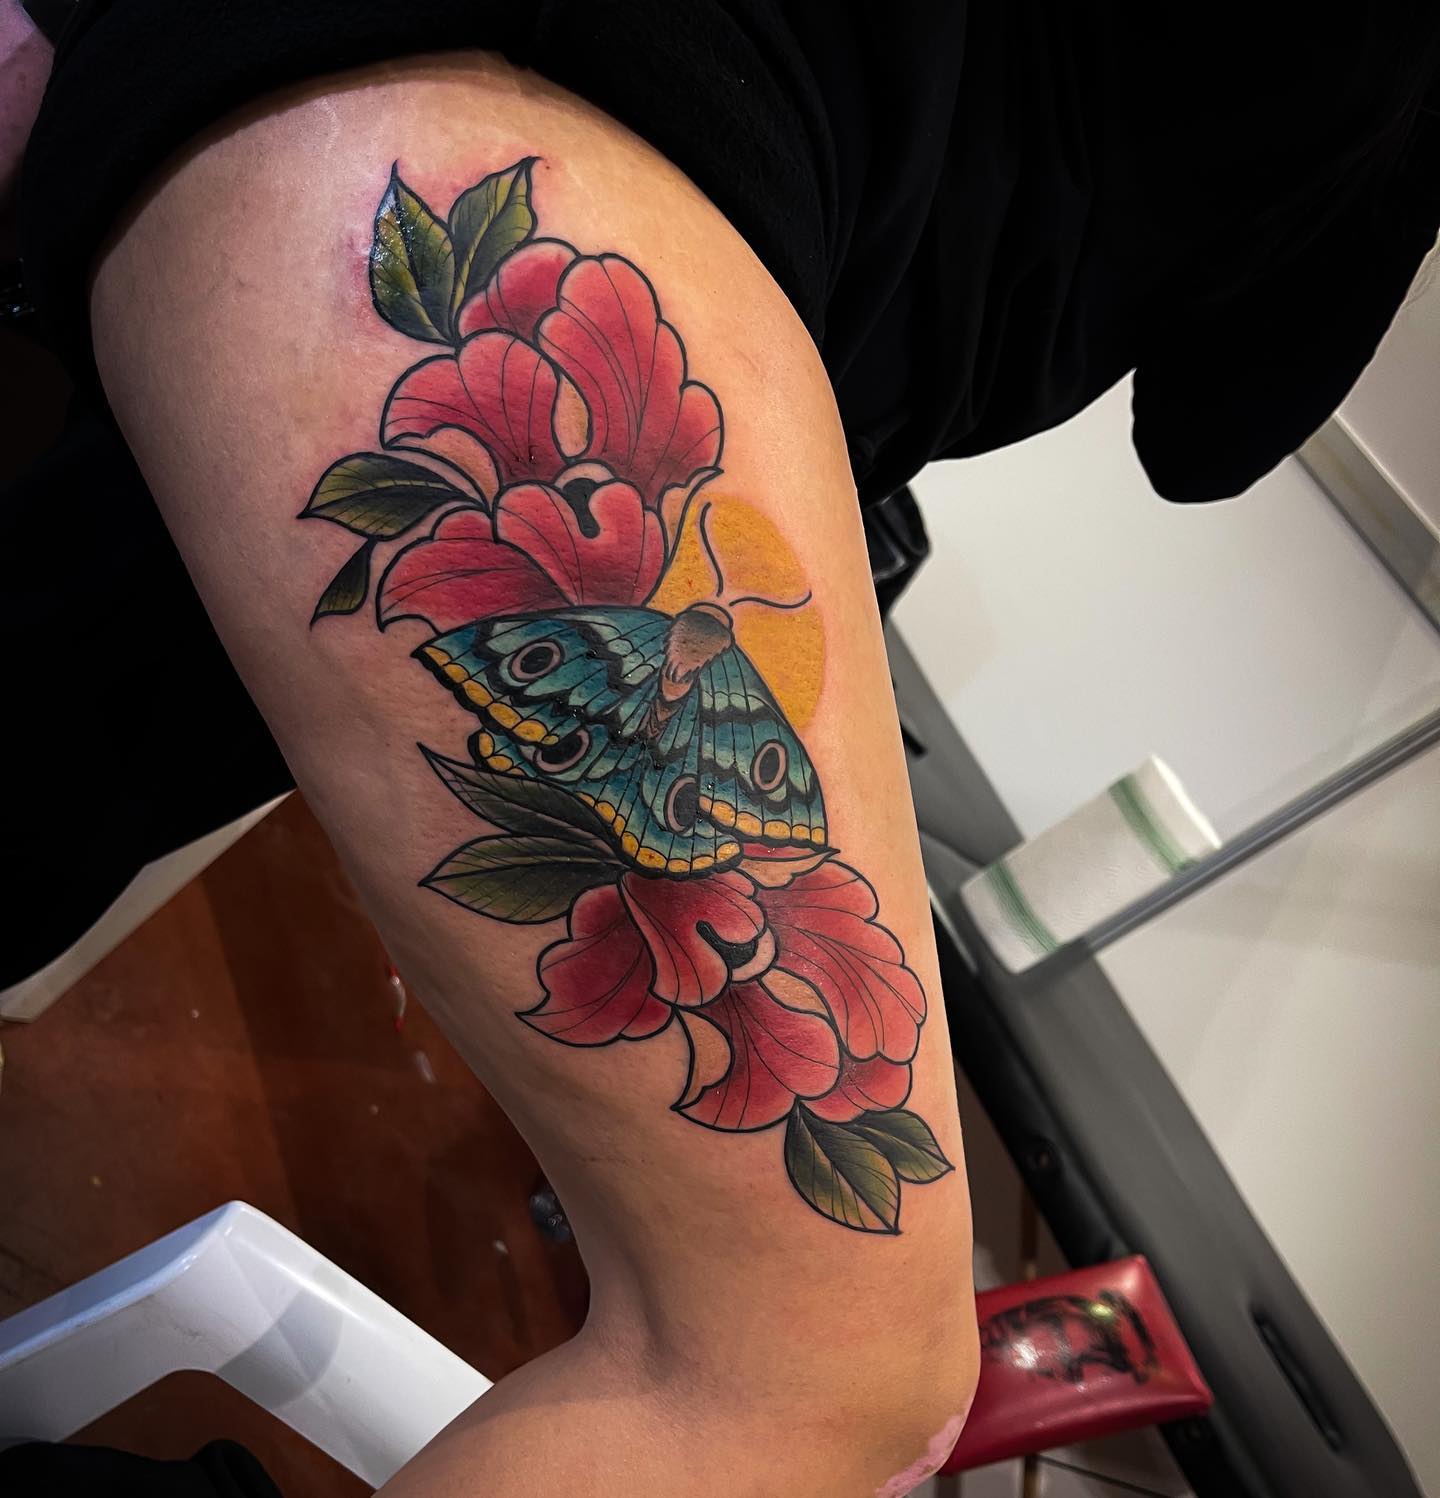 Tatuaje de mariposa con flores.